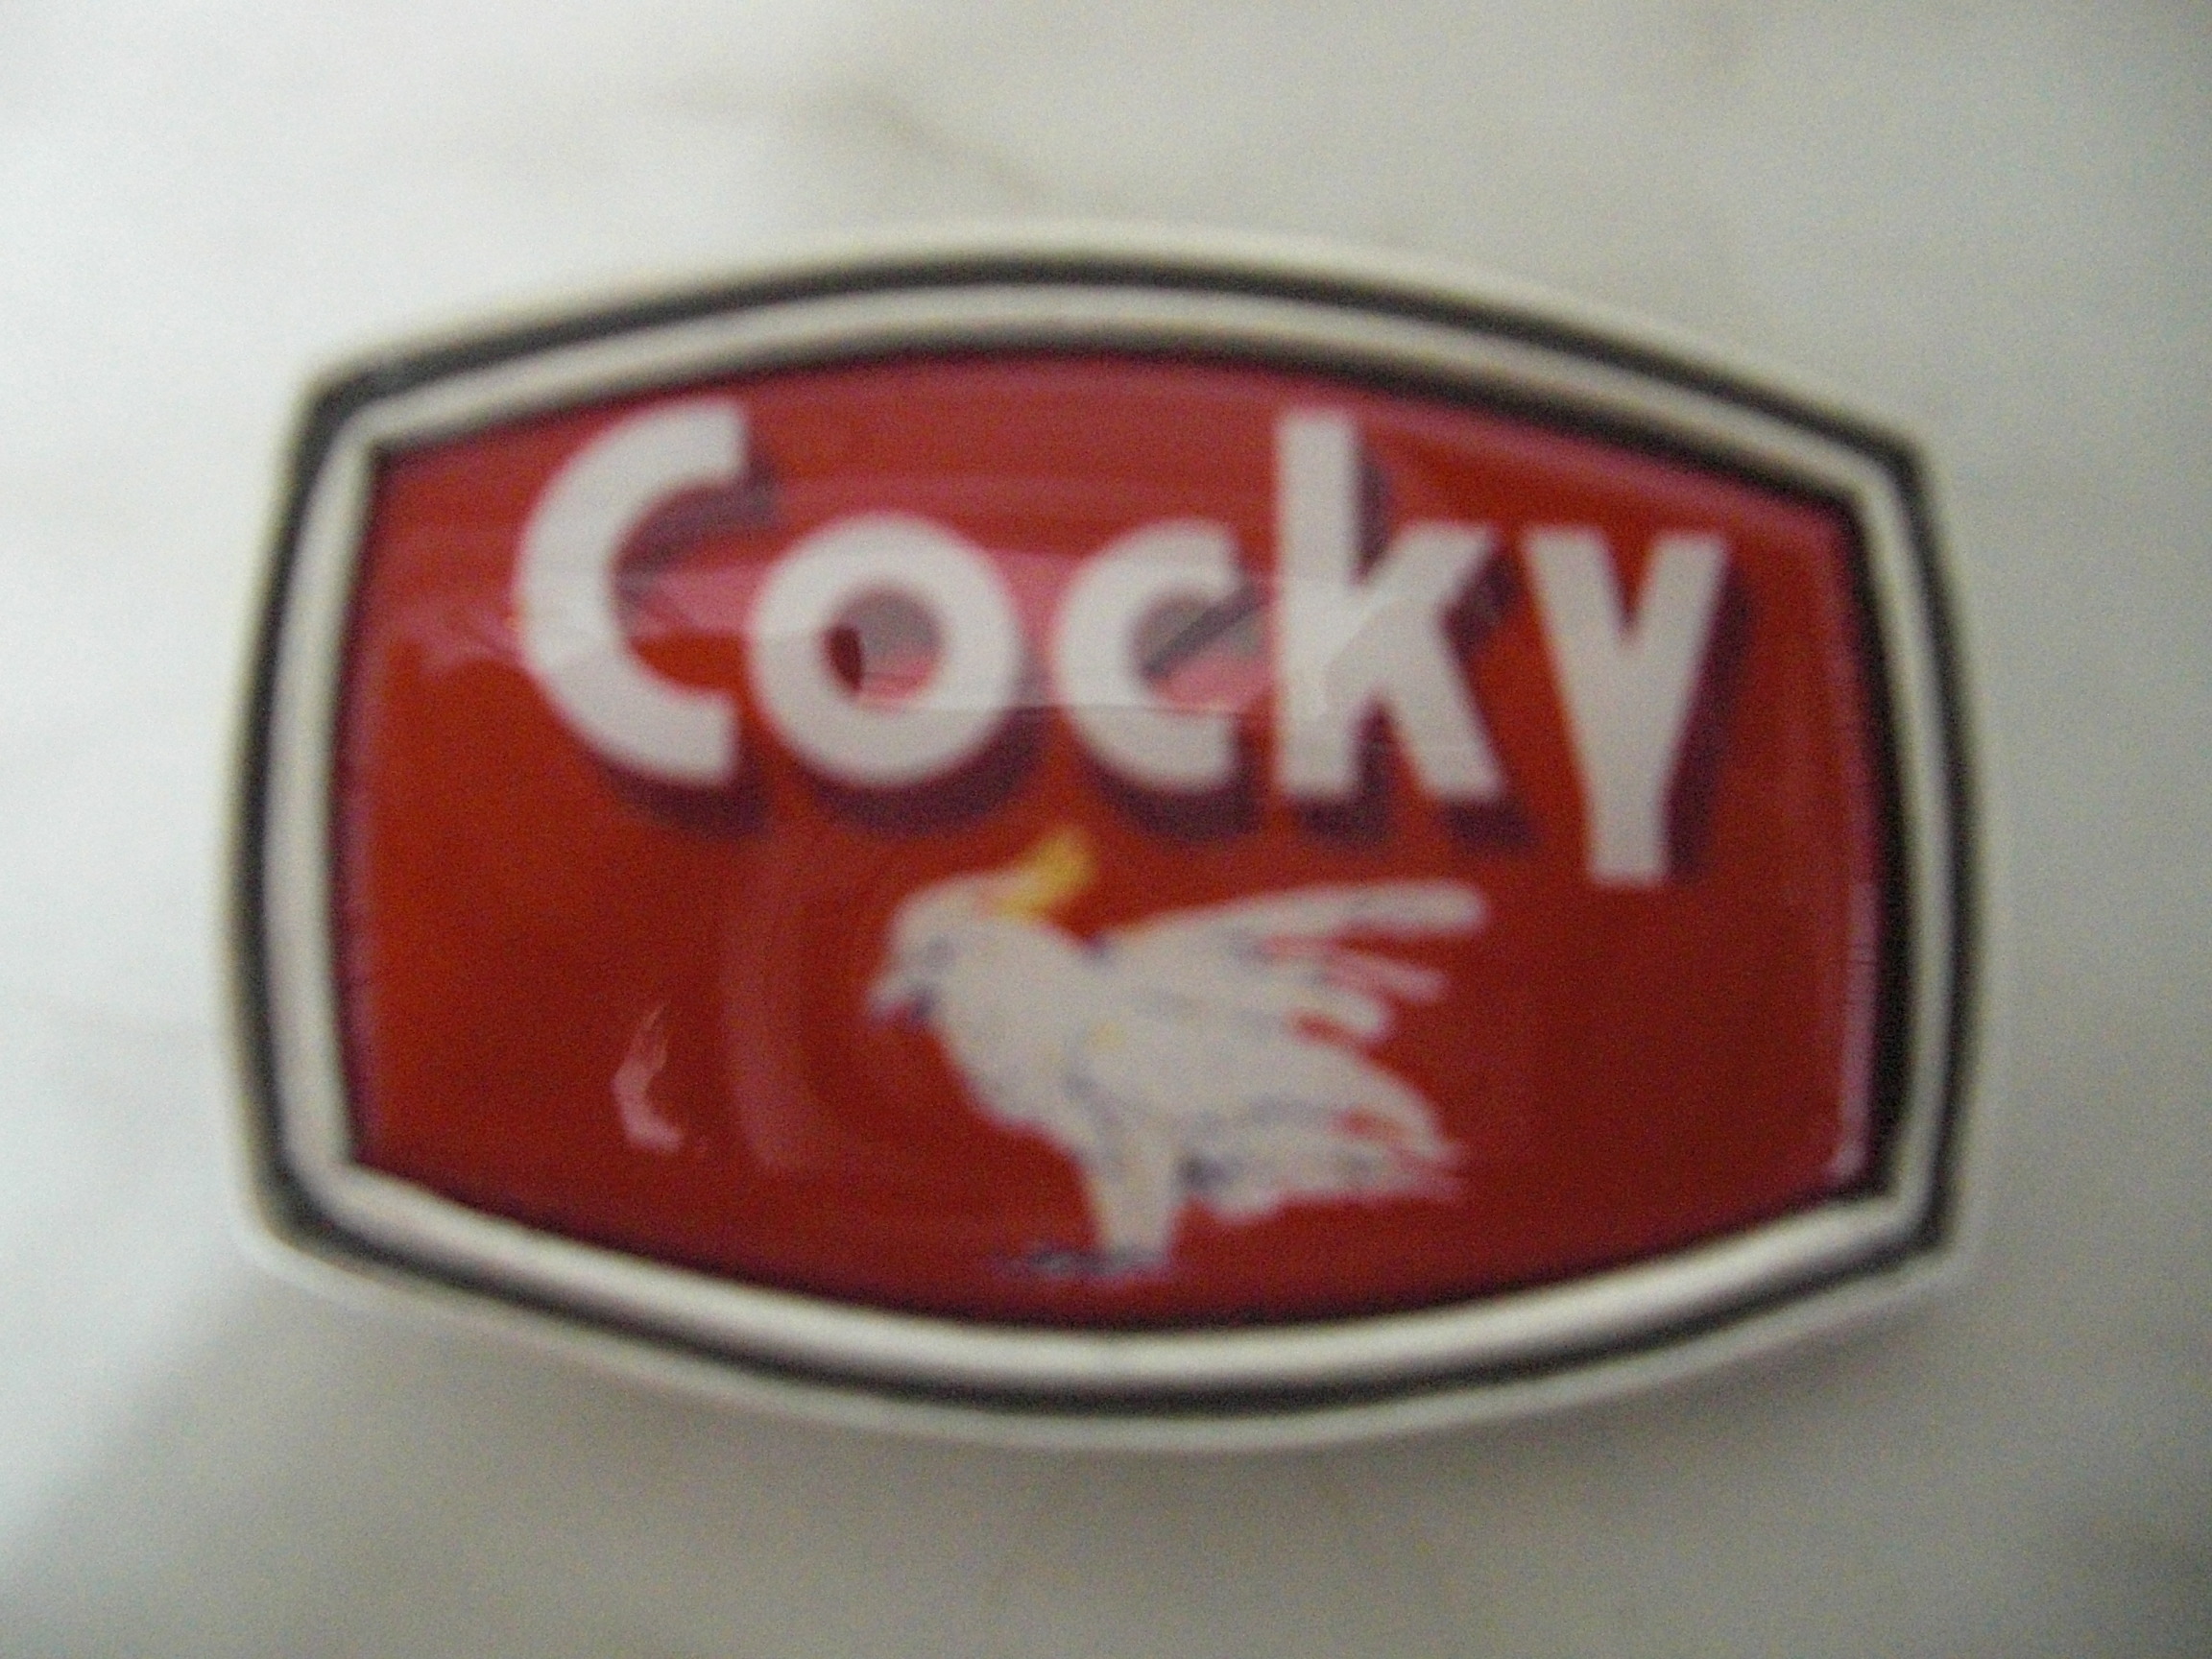 cocky belt buckle